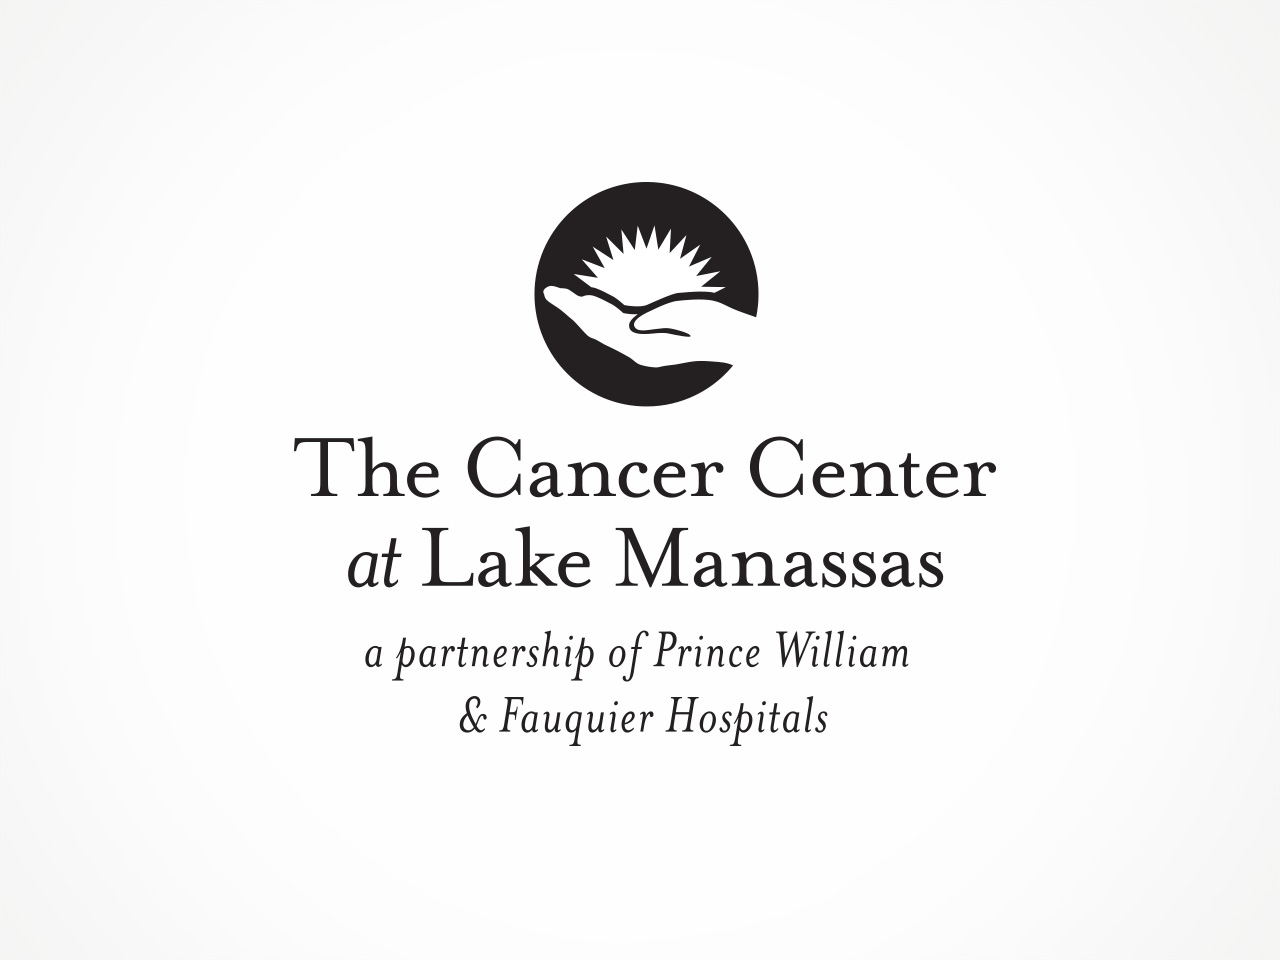 The Cancer Center at Lake Manassas